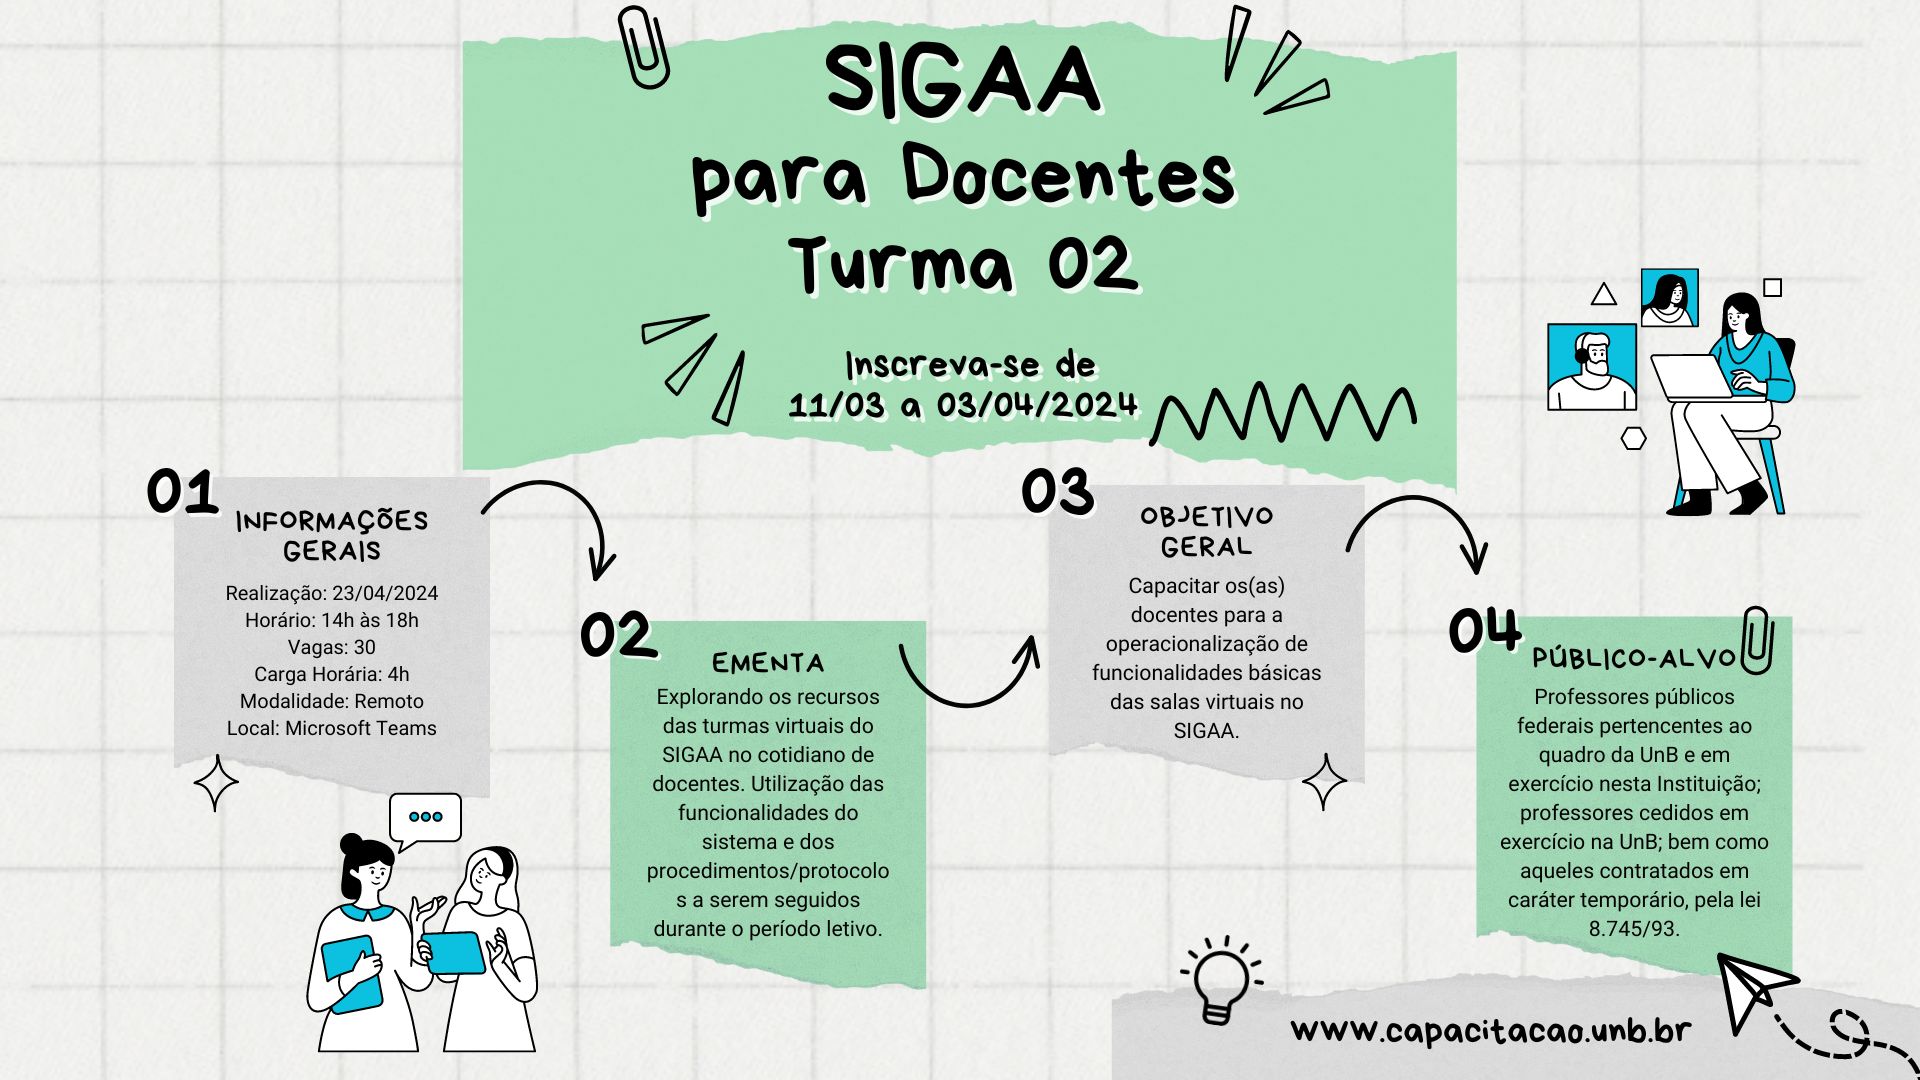 _SIGAA_para_Docentes_Turma_02_-_site.jpg